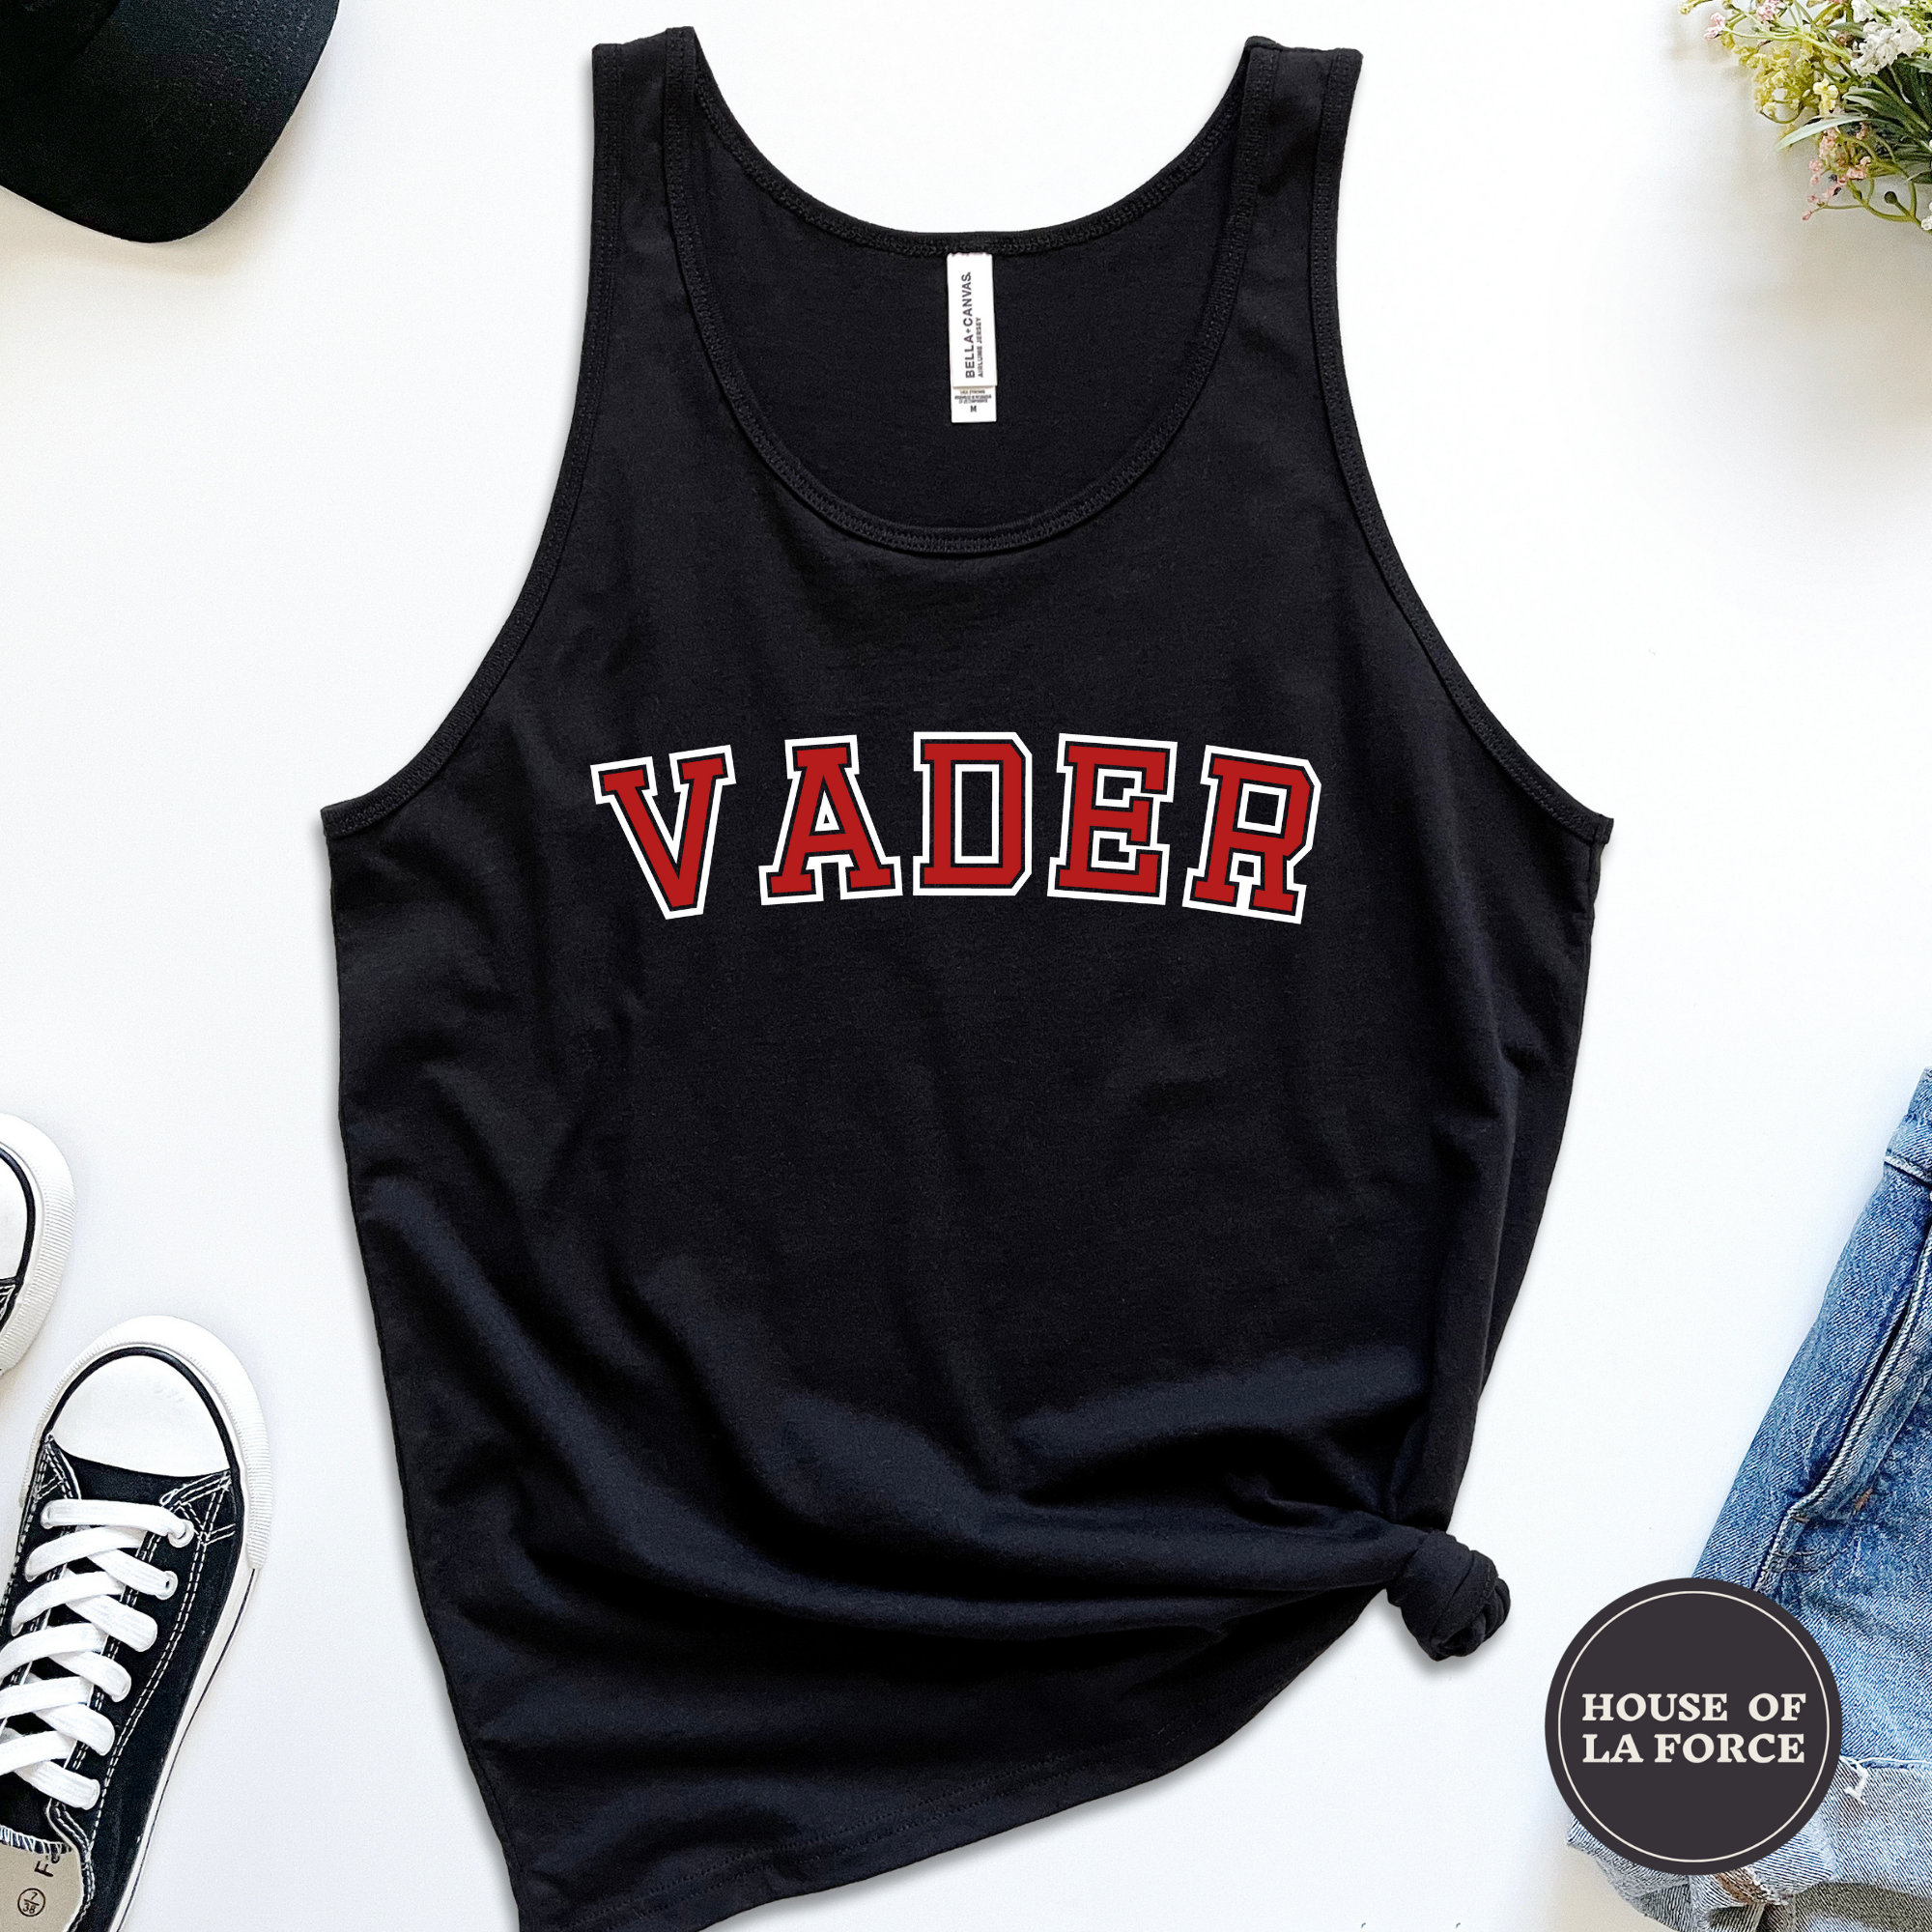 Kleding Herenkleding Overhemden & T-shirts Tanktops Funny Star Wars Shirt Yoda & Darth Vader rijden op een fiets 